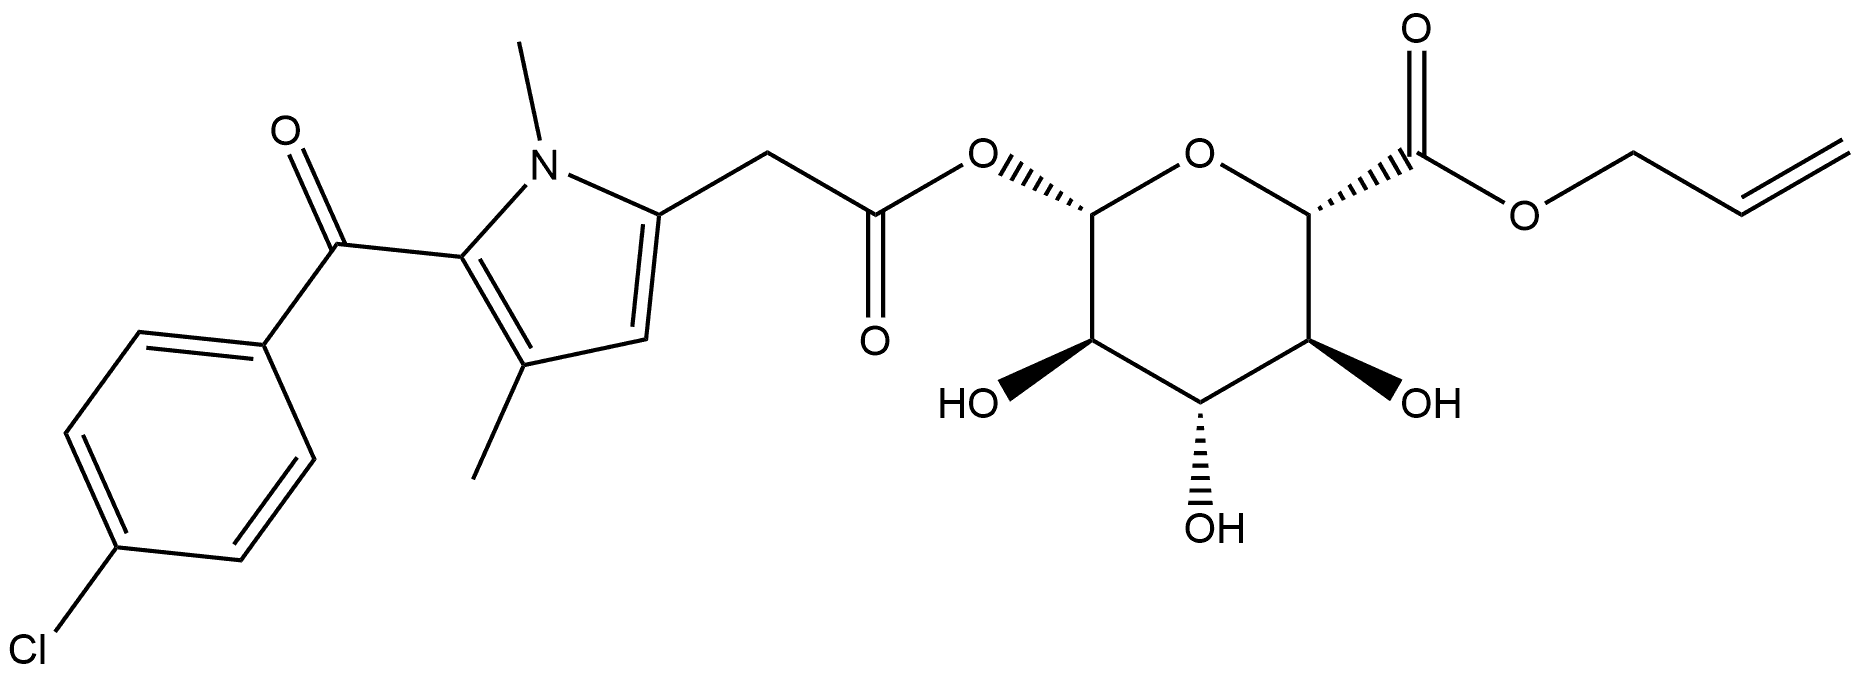 860615-41-4 Zomepirac Acyl-O-β-D-glucuronide 2-Propenyl Ester